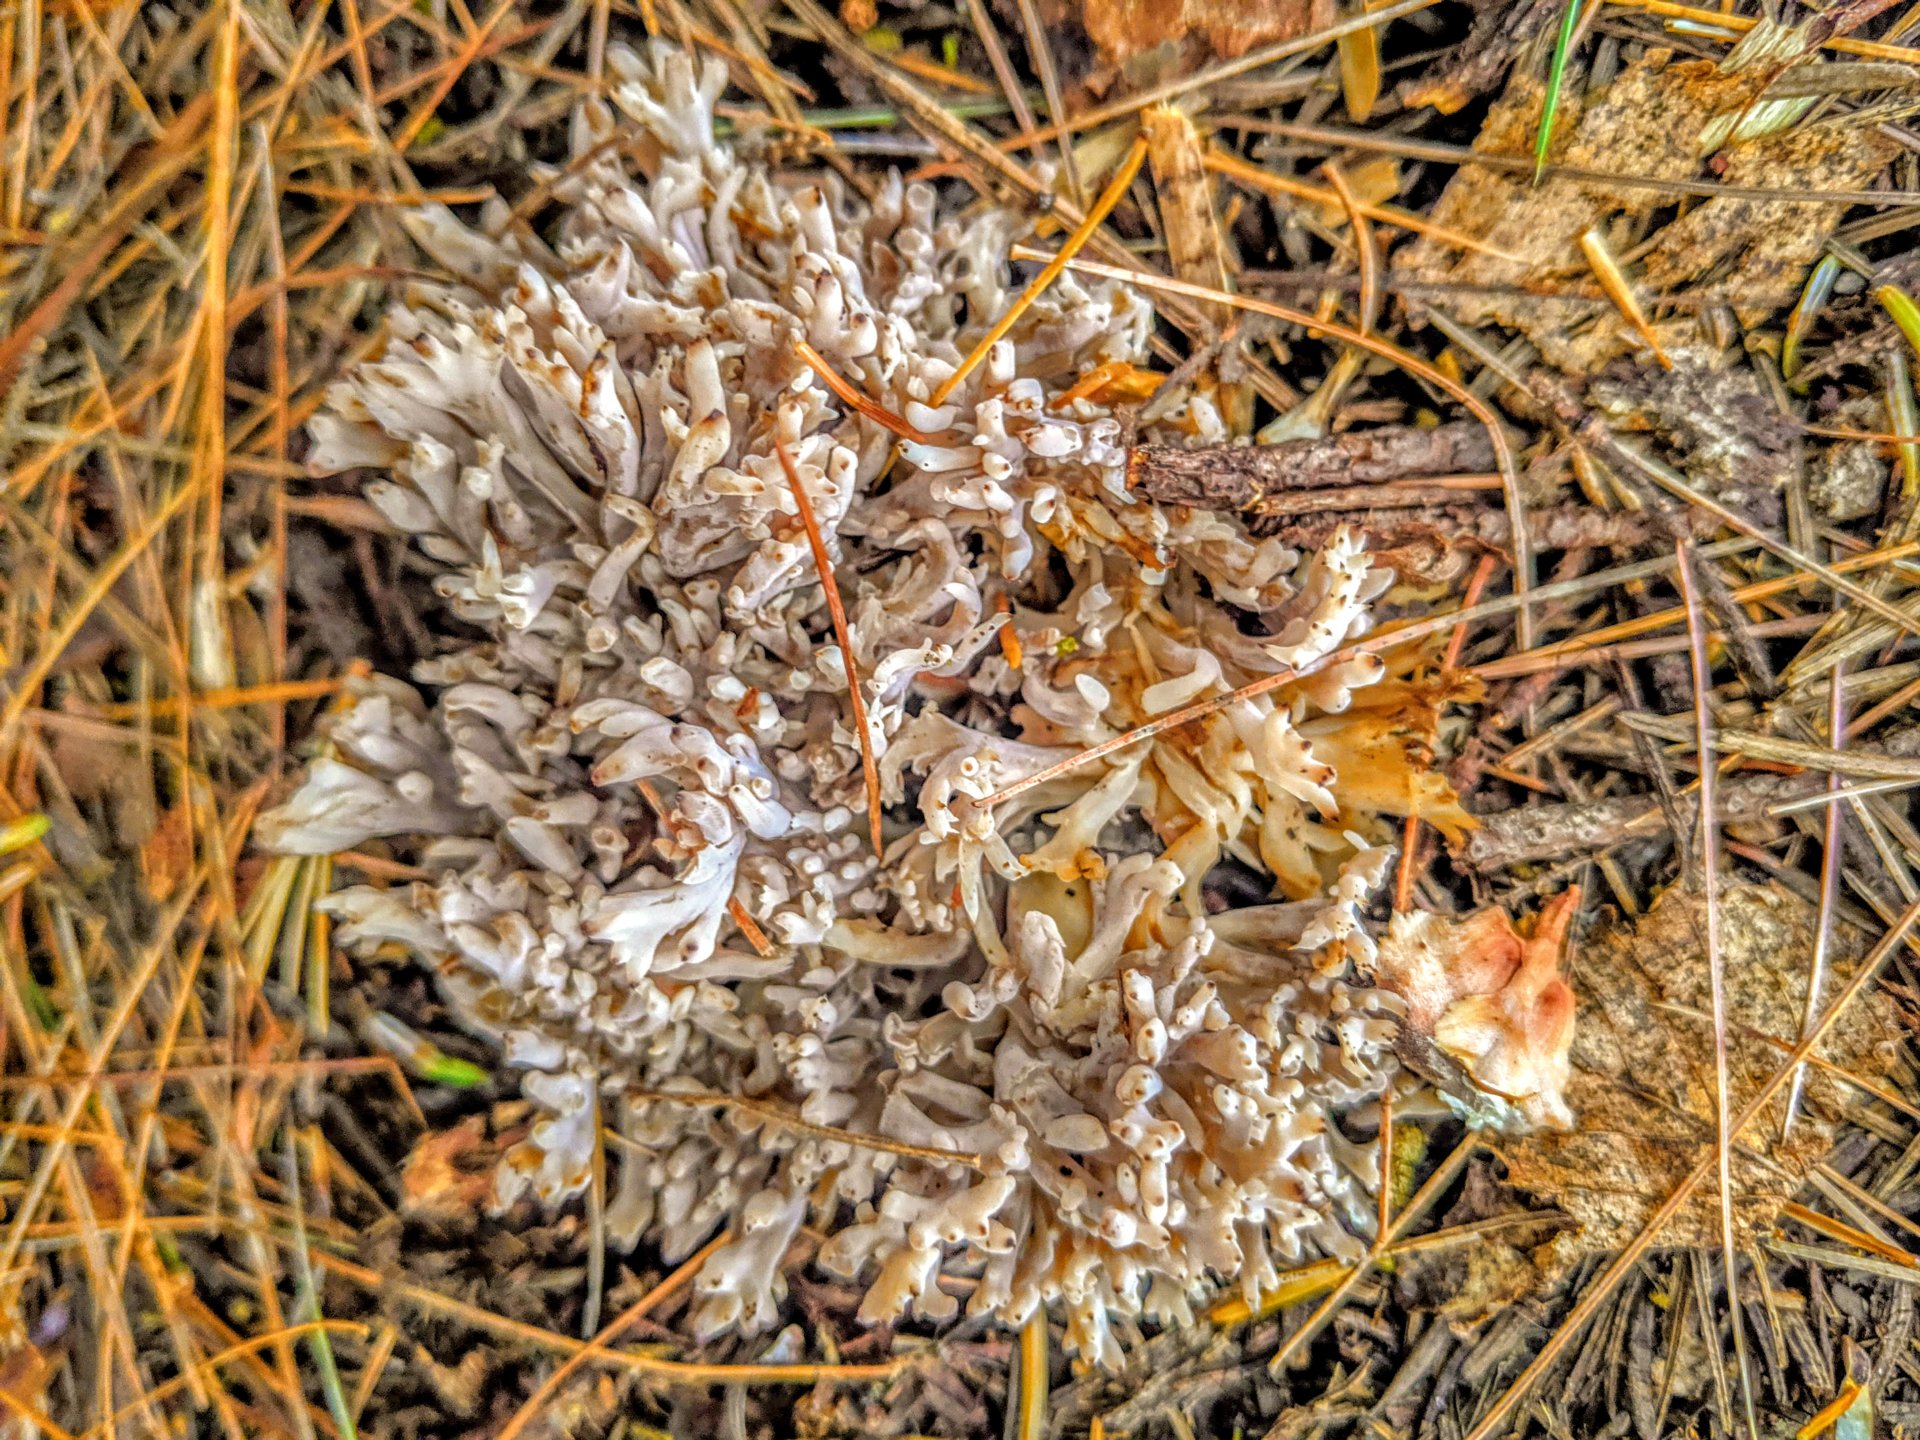 spongy, long tentacles looking mushrooms, in Downeast, Maine. 2019